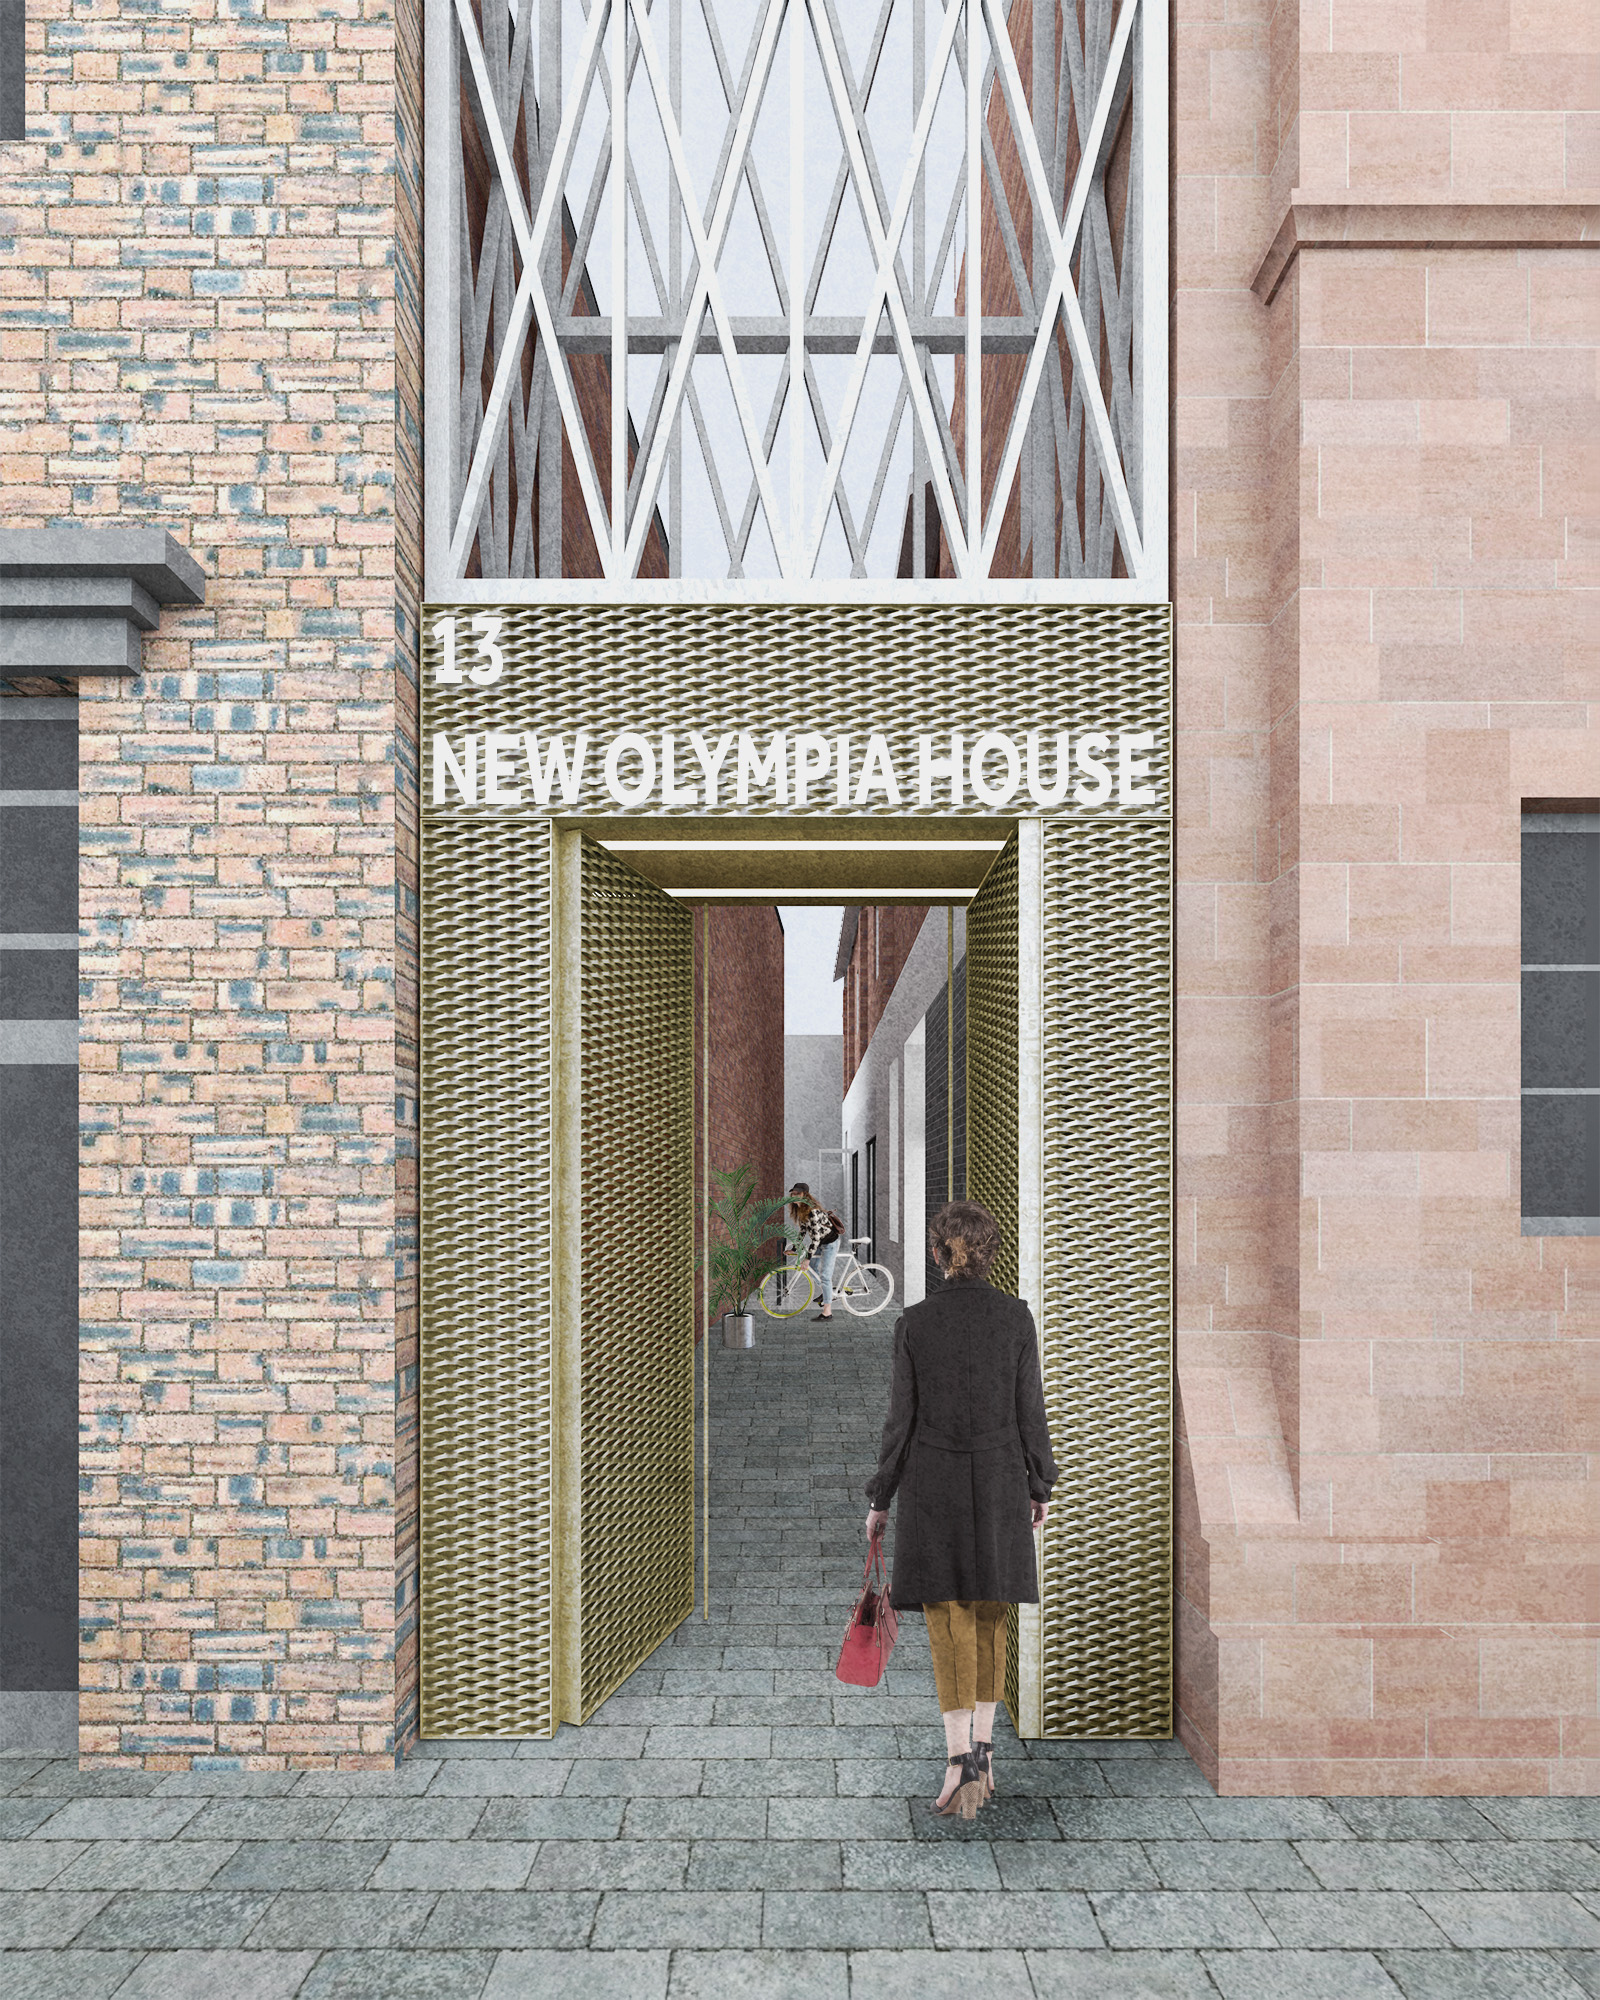 £1.67m refurb starts at New Olympia House in Bridgeton